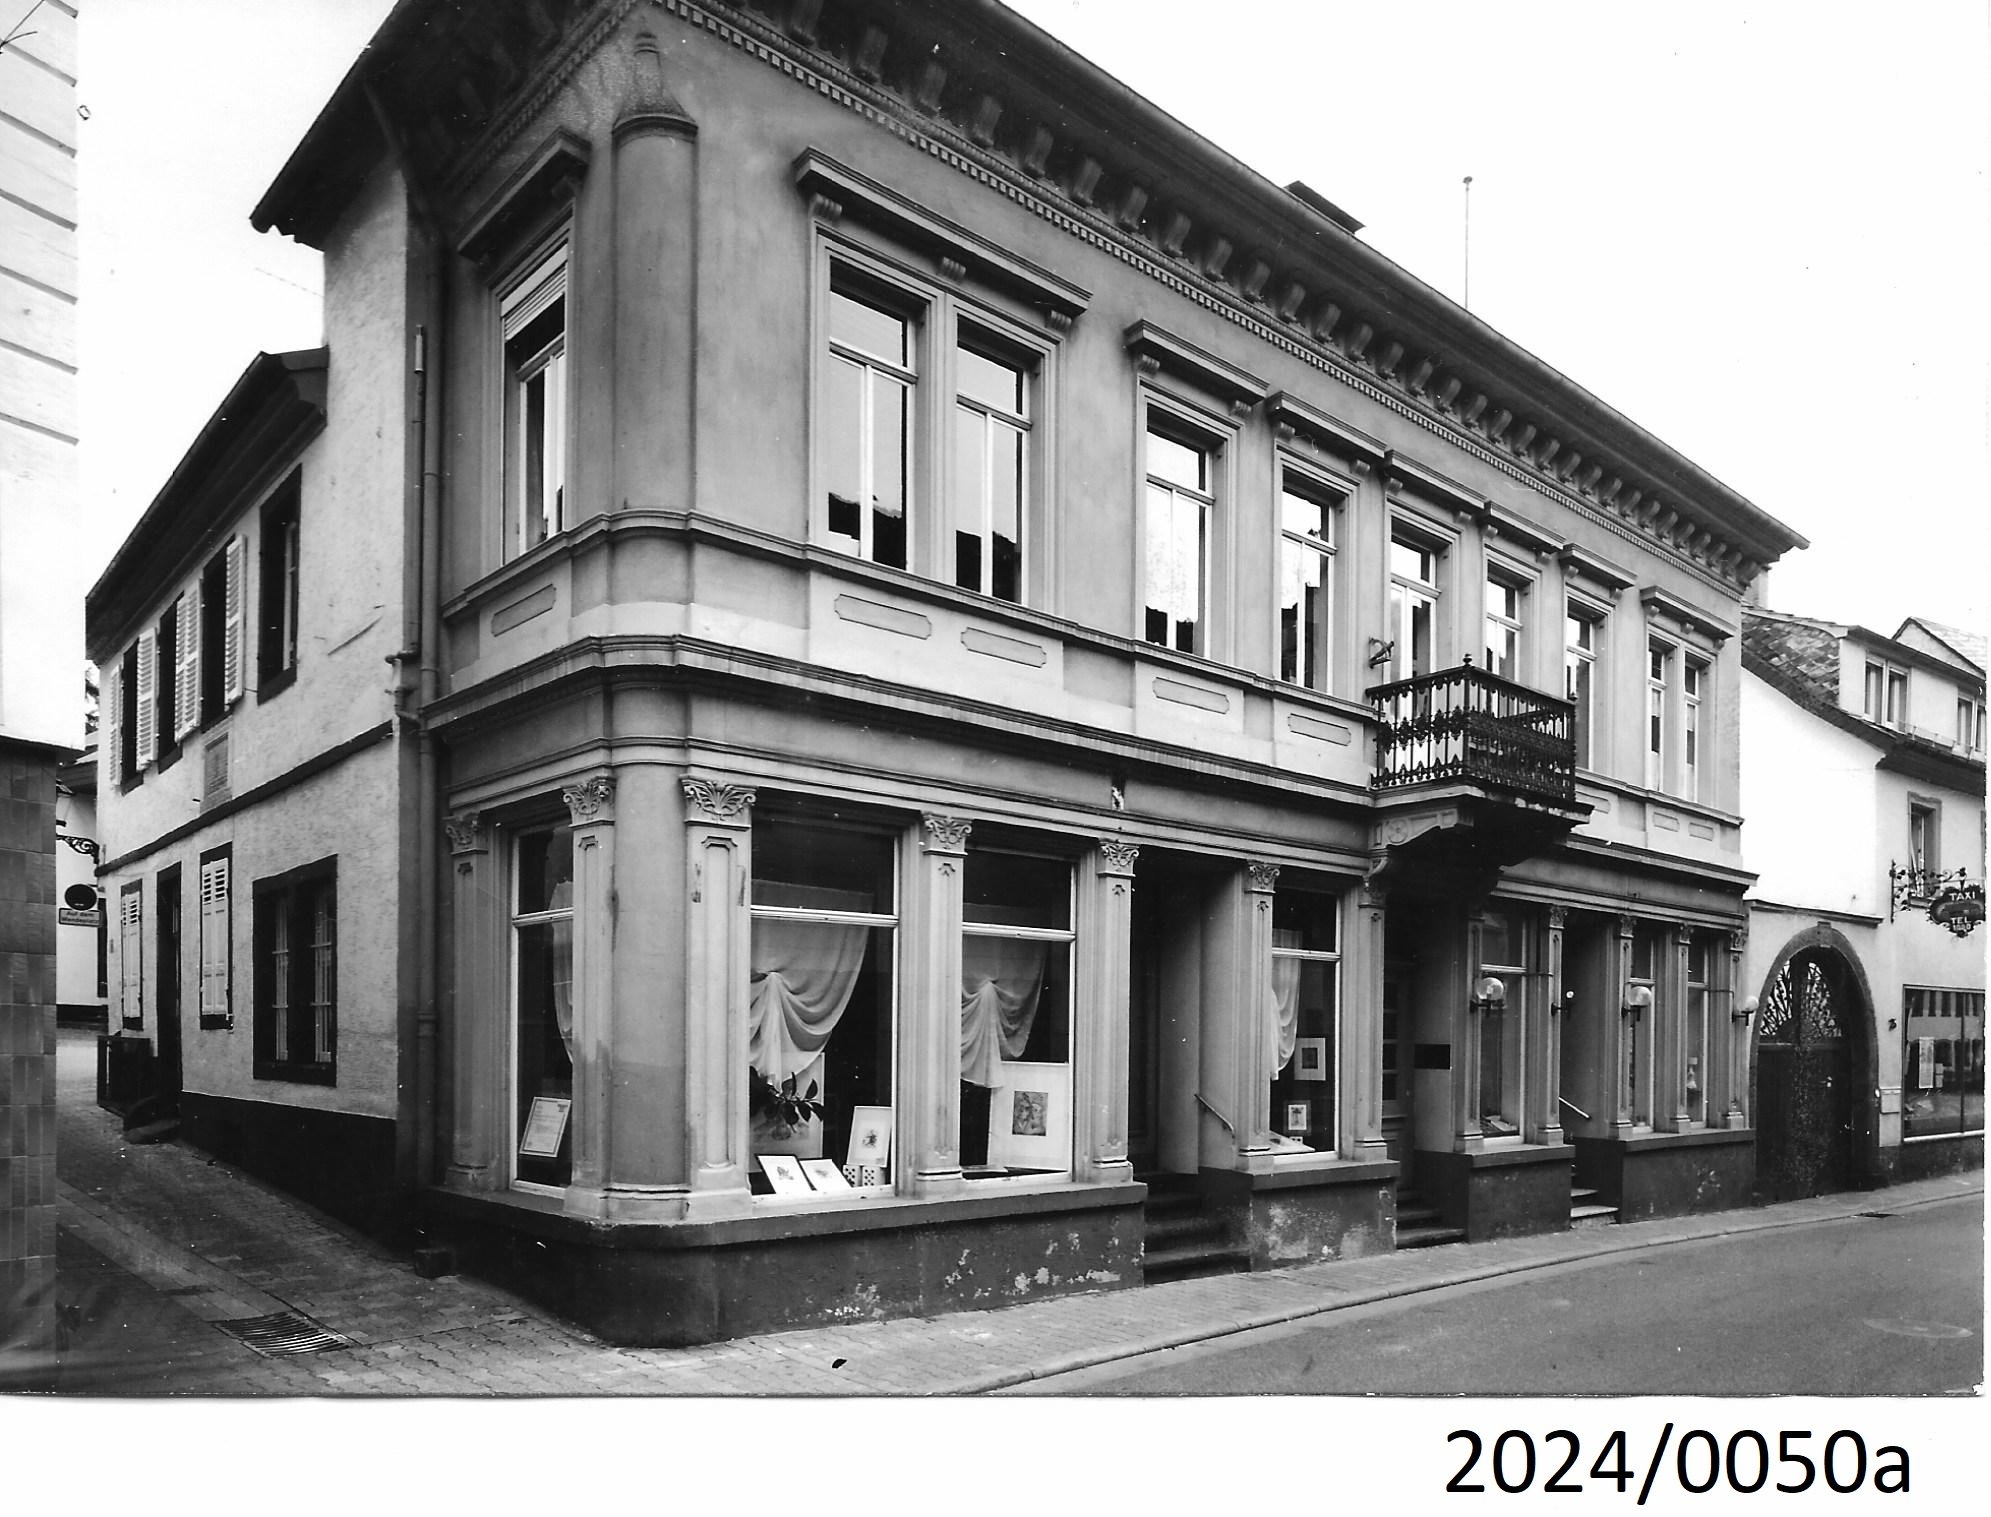 Bad Dürkheim, Ehemaliges Schulgebäude Römerstraße 23, 1991 (Stadtmuseum Bad Dürkheim im Kulturzentrum Haus Catoir CC BY-NC-SA)